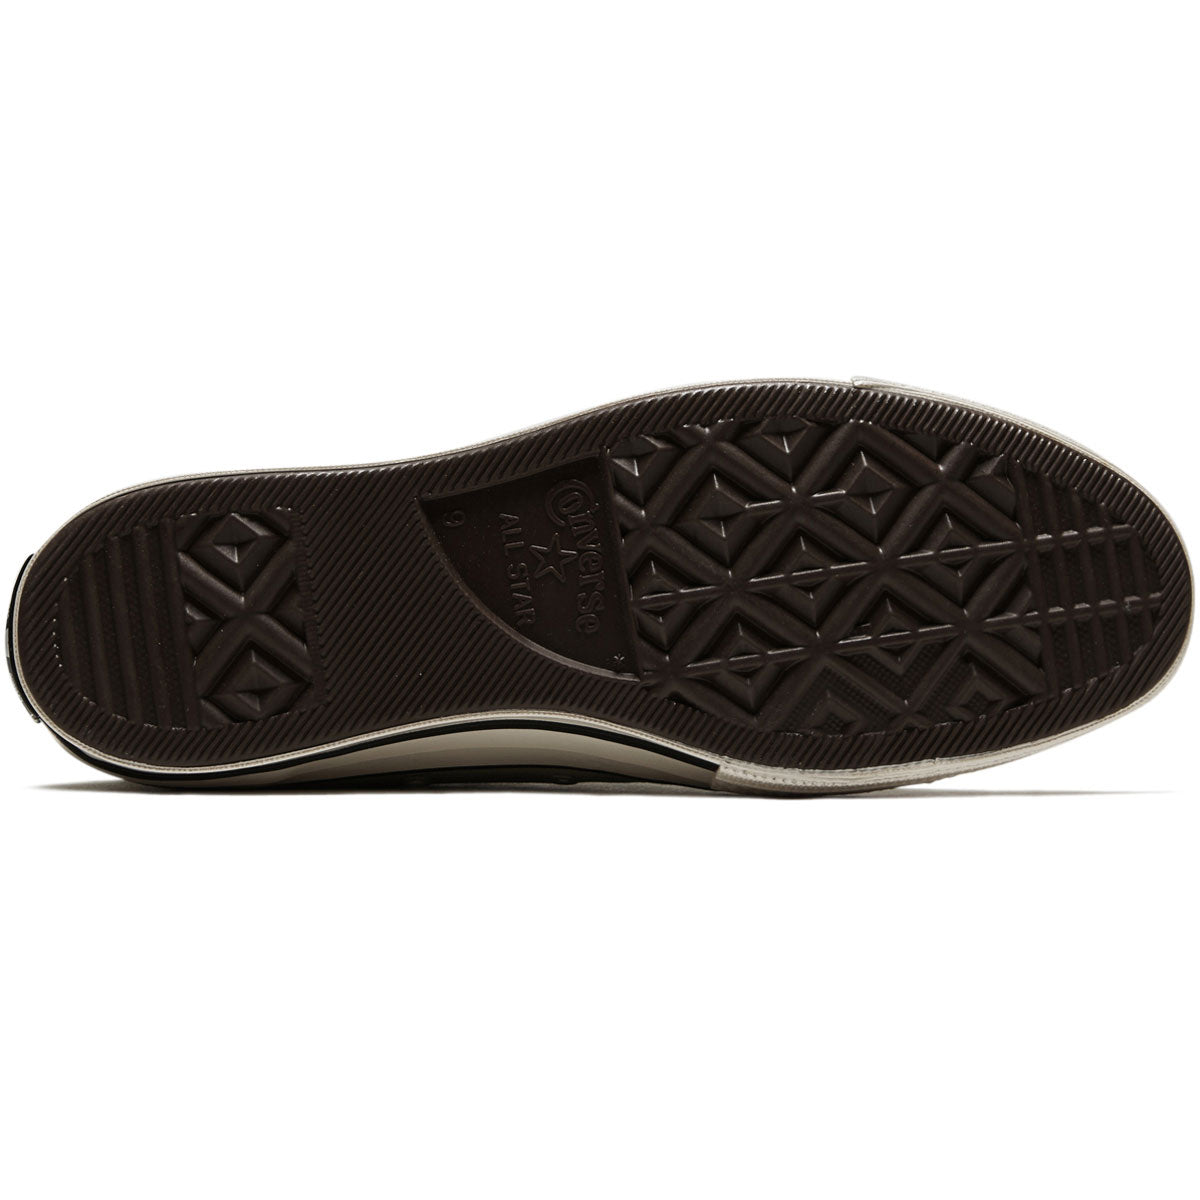 Converse Chuck 70 Hi Shoes - Vitality Green/Egret/Black image 4